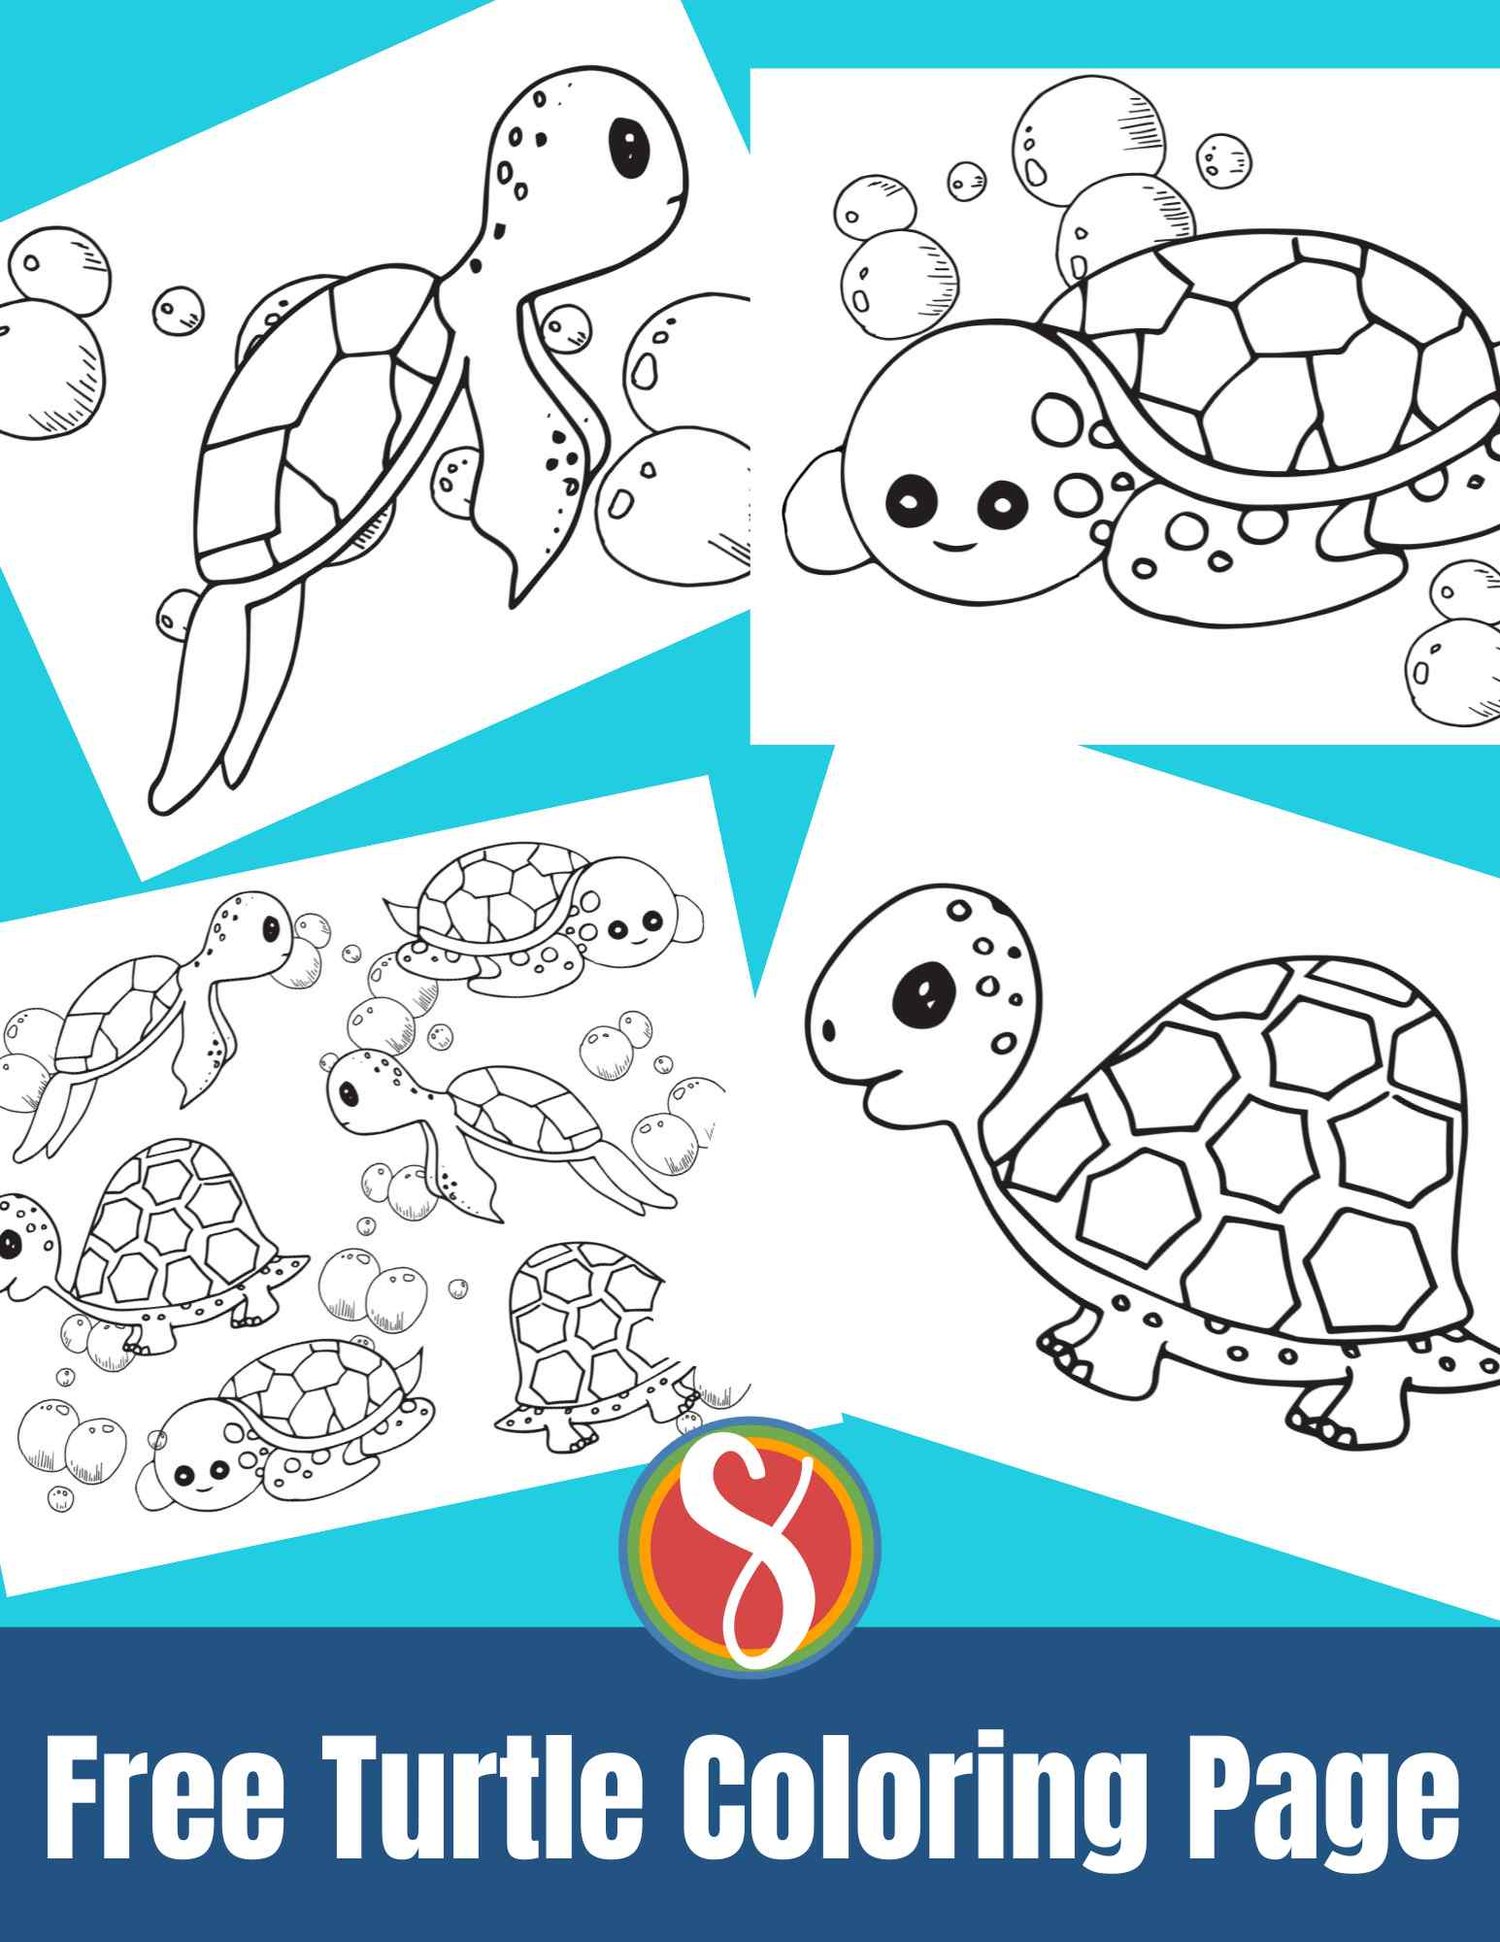 Free turtle coloring pages â stevie doodles